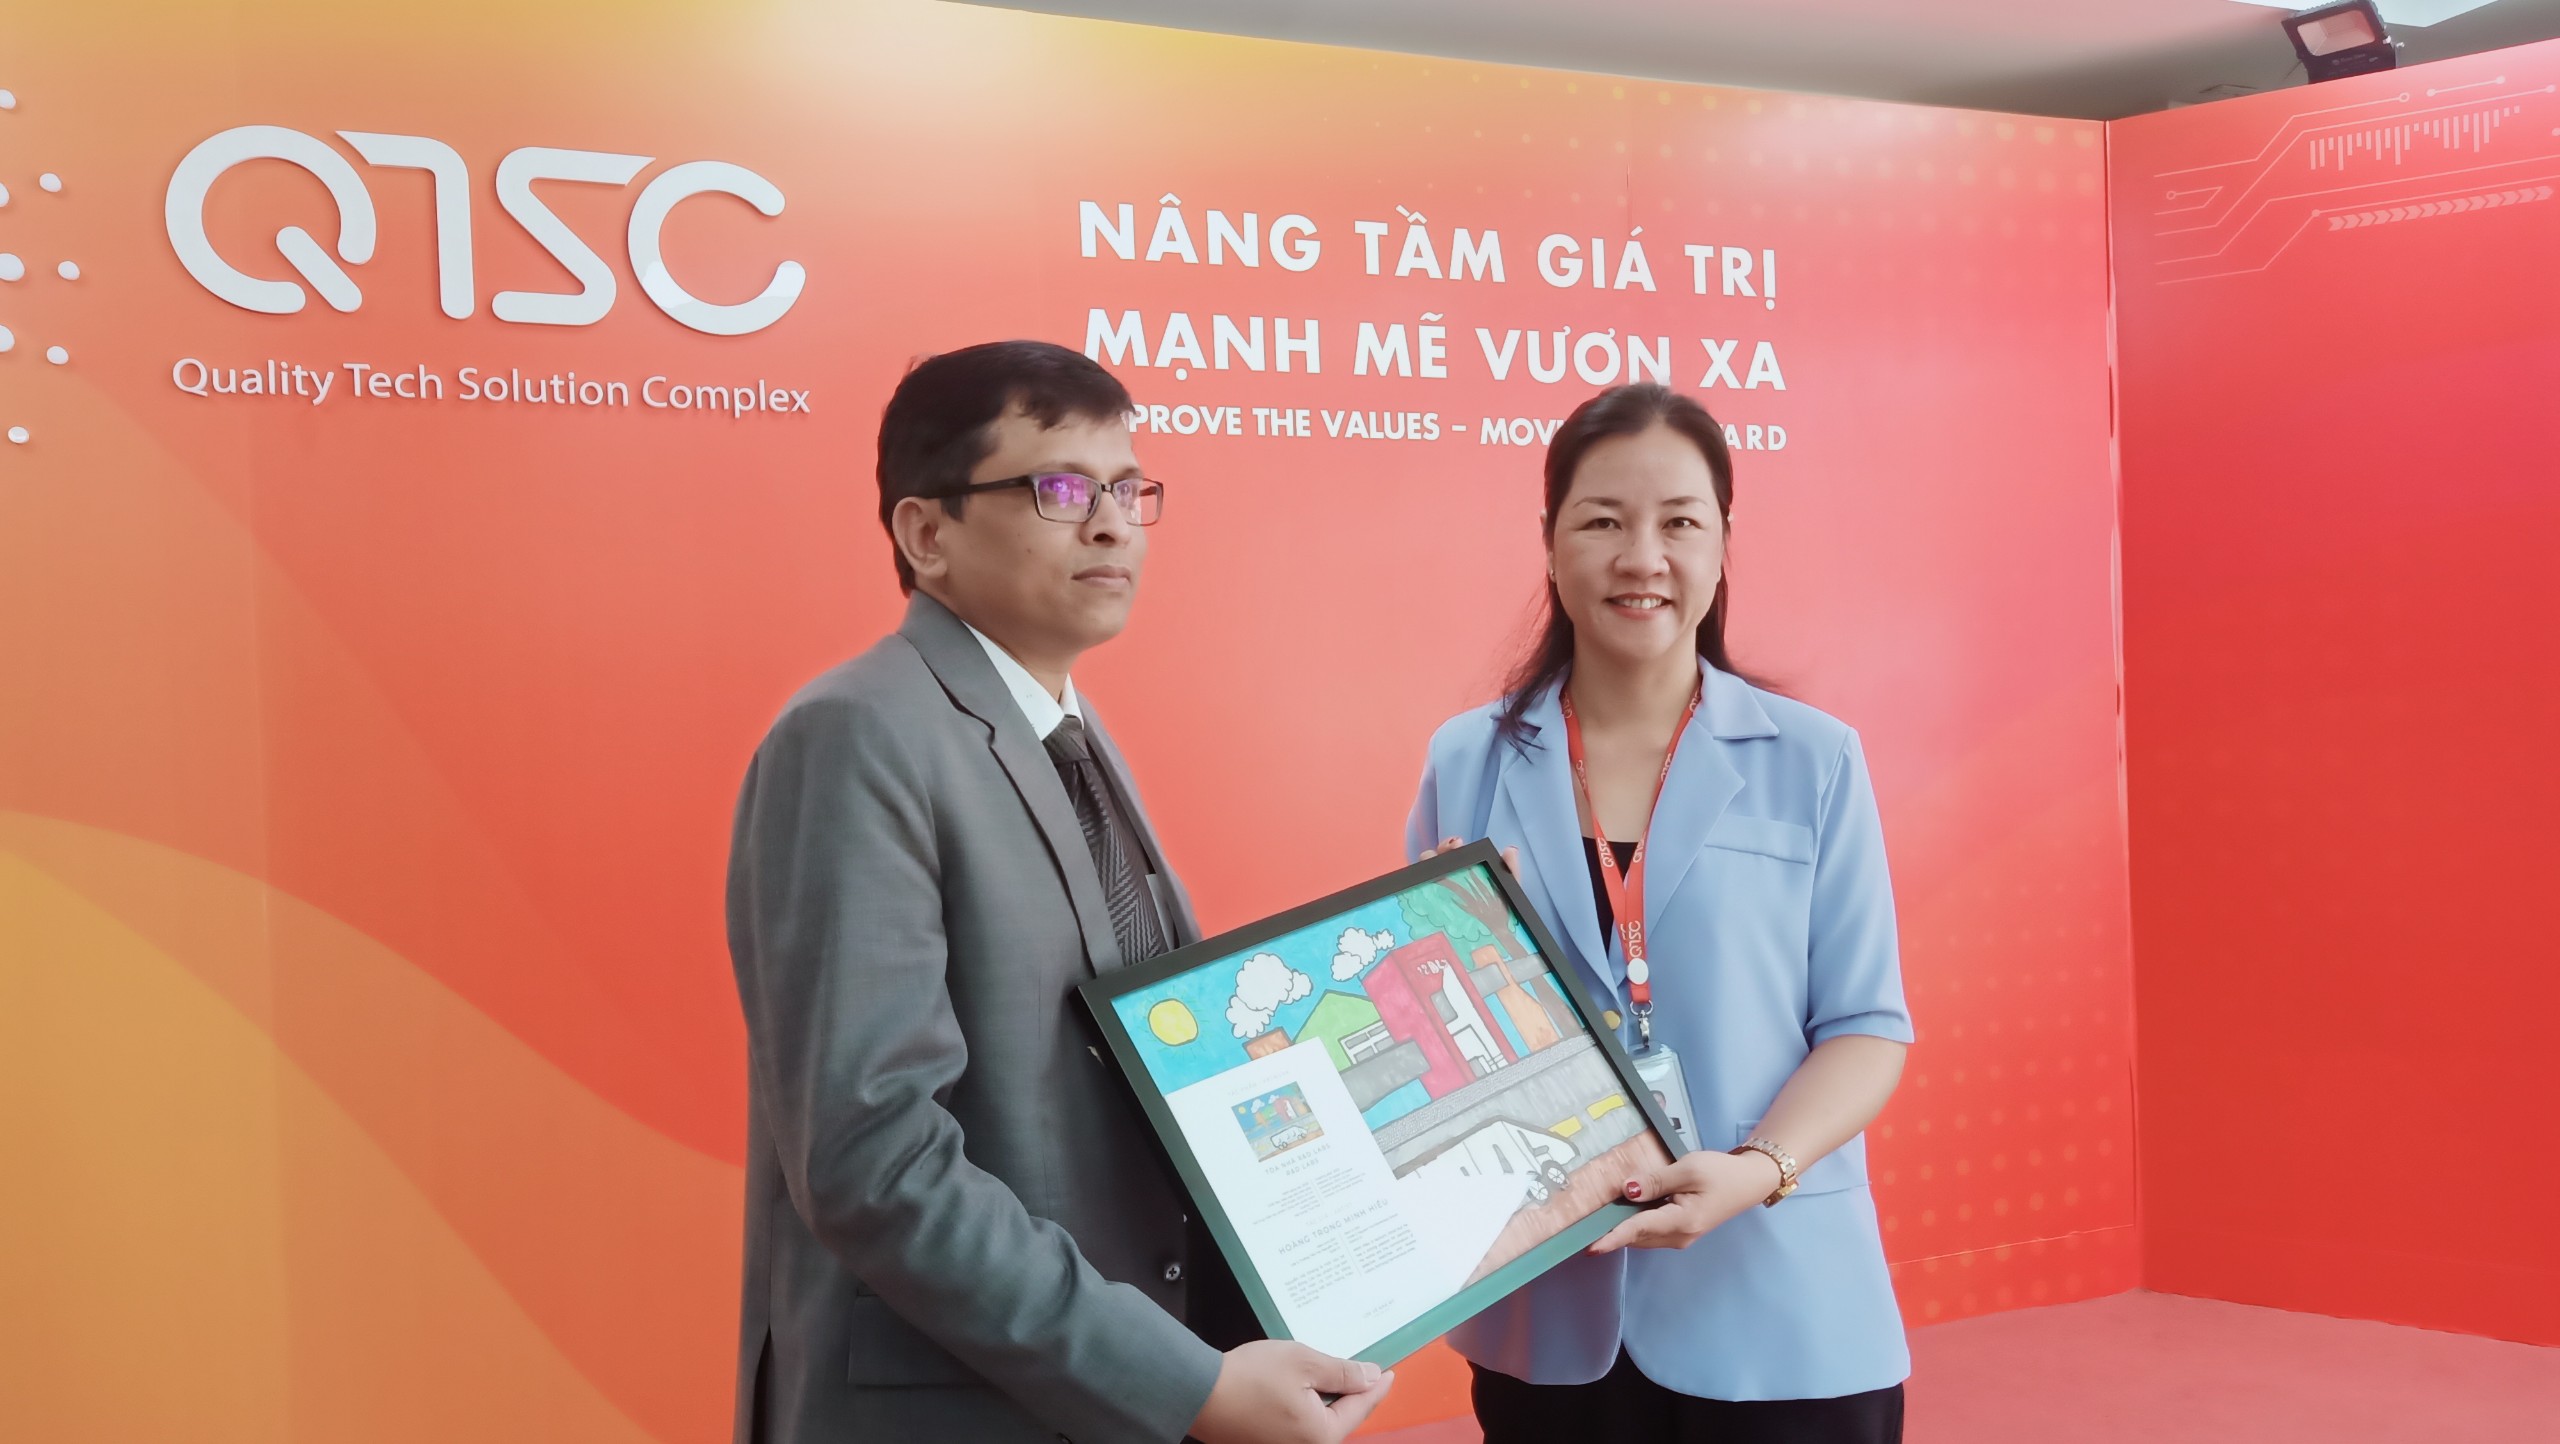 Ms. Pham Thi Kim Phuong gave a souvenir gift for the delegation’s representative